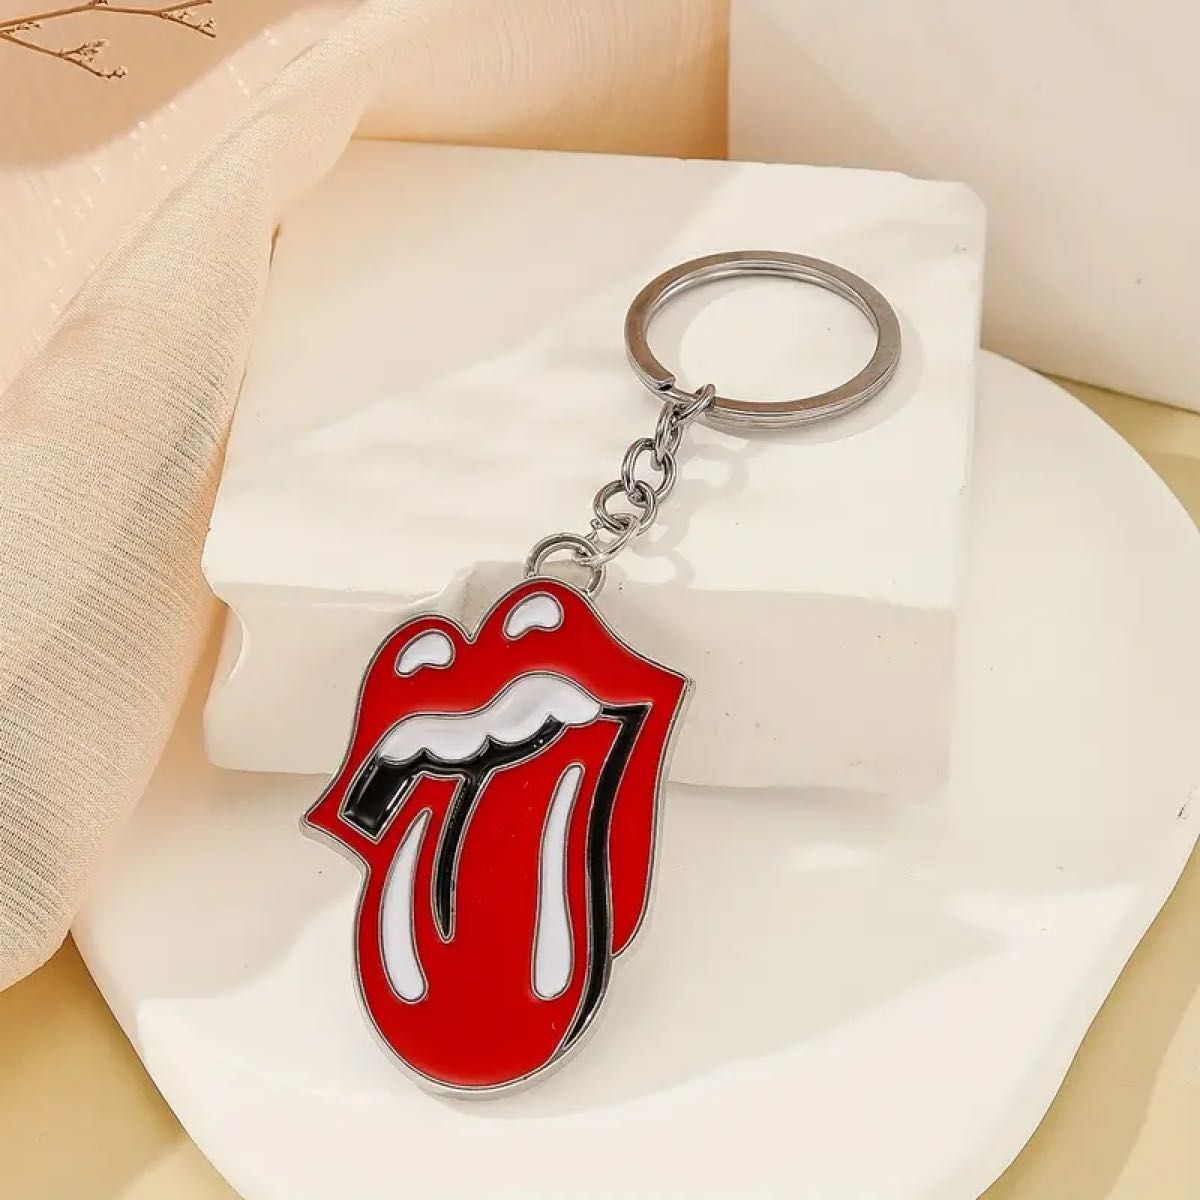 The Rolling Stones ローリング ストーンズ ロゴ キーホルダー  キーリング アメリカン雑貨 ロックバンド